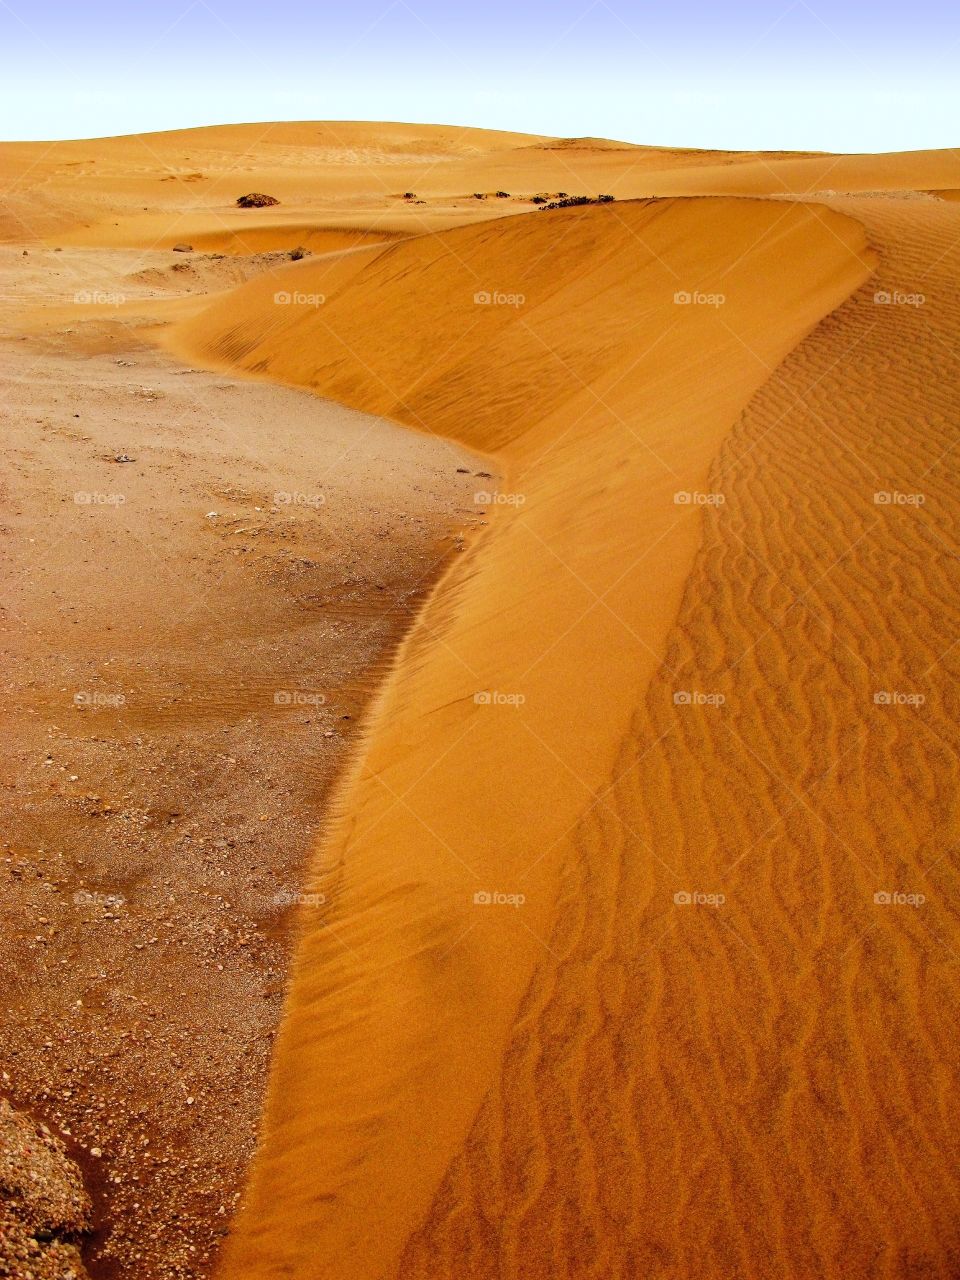 Small orange colored dunes of Namib desert in Namibia near Swakopmund, South Africa 